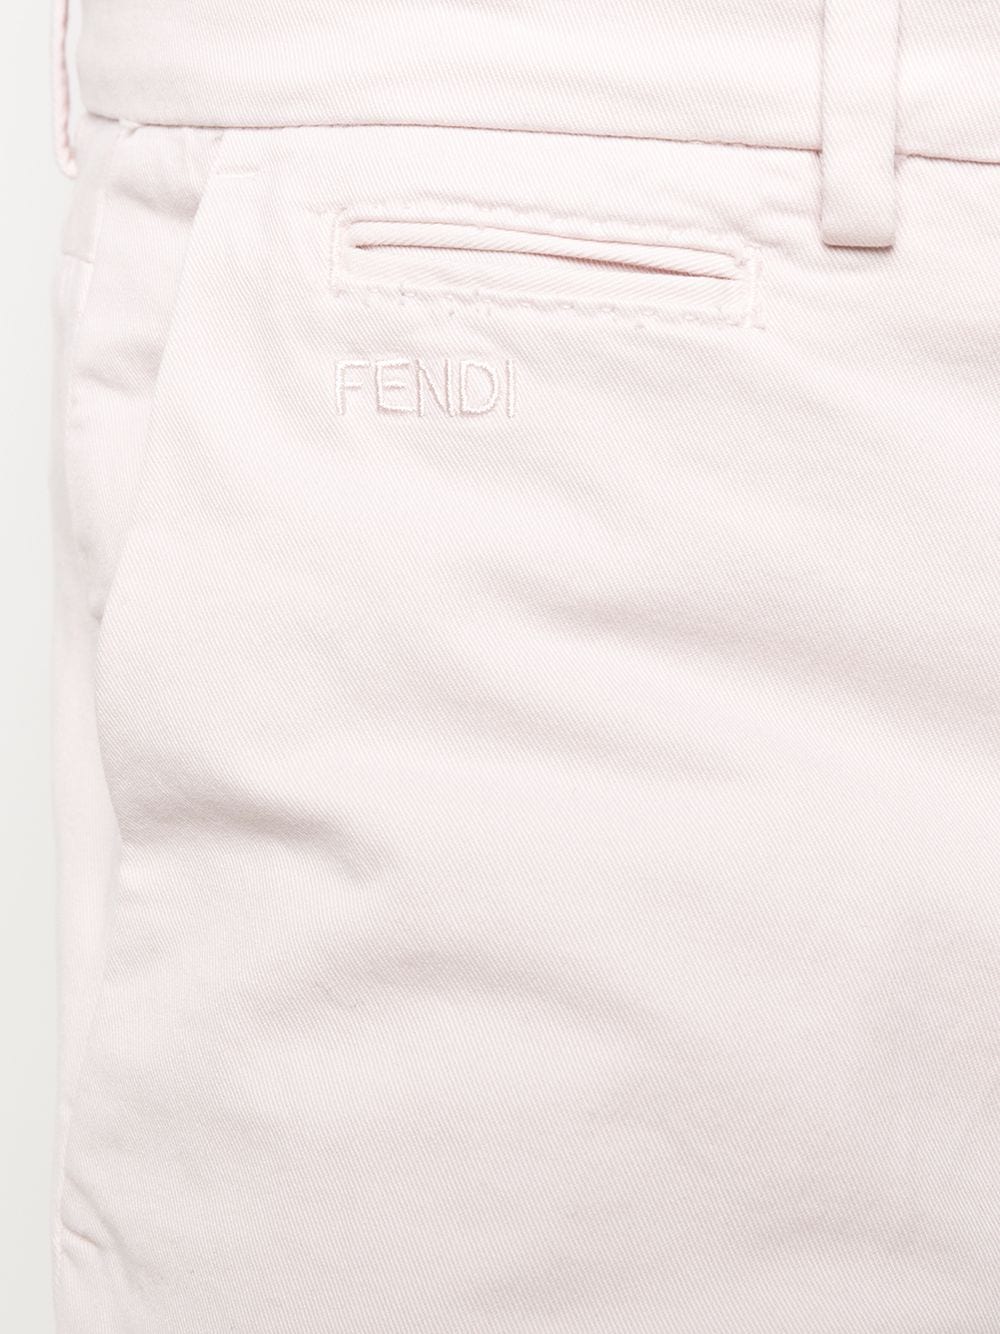 фото Fendi прямые брюки